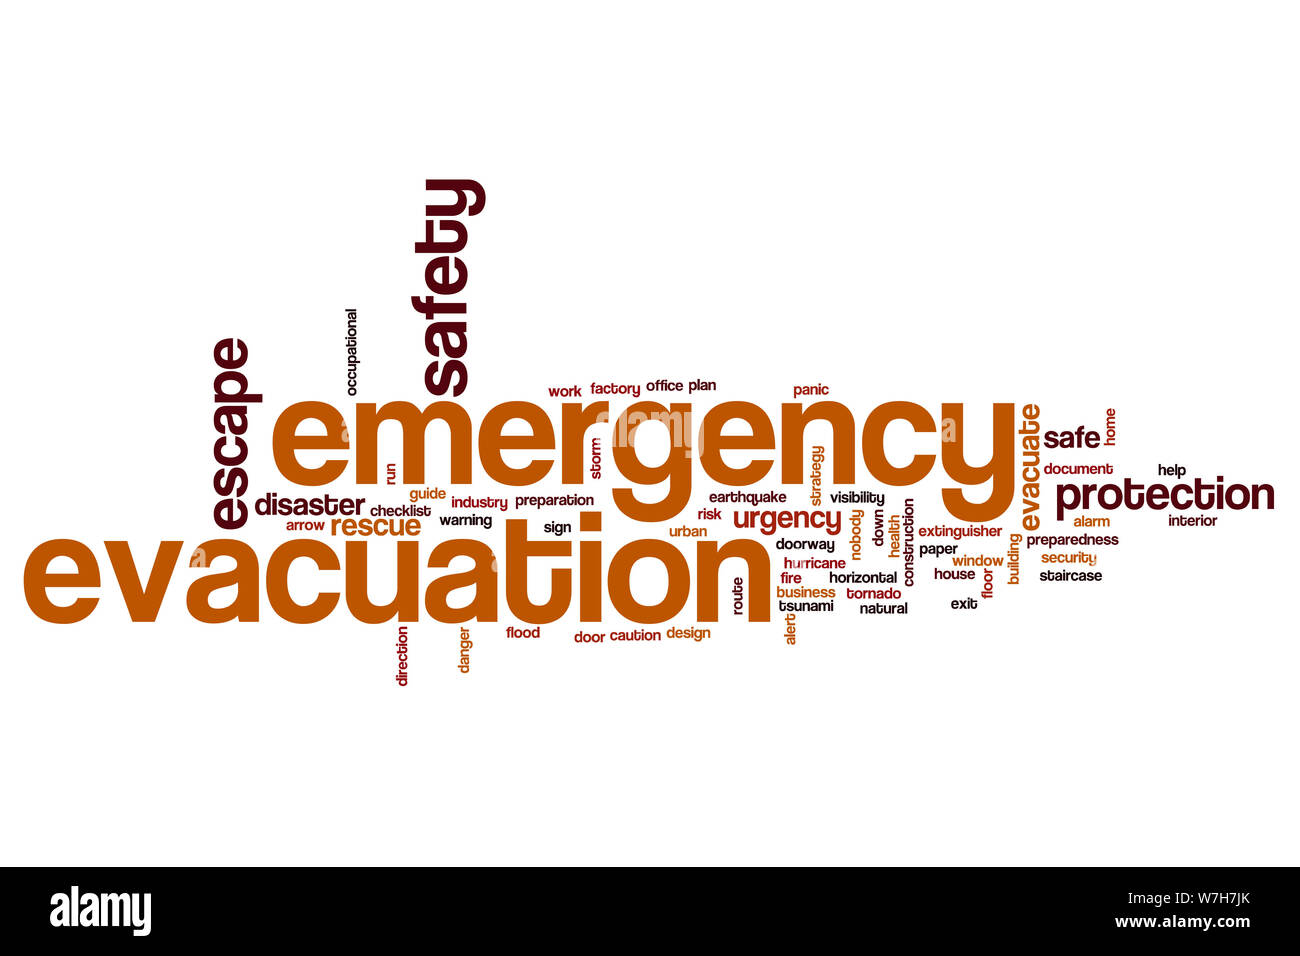 Emergency evacuation word cloud concept Stock Photo